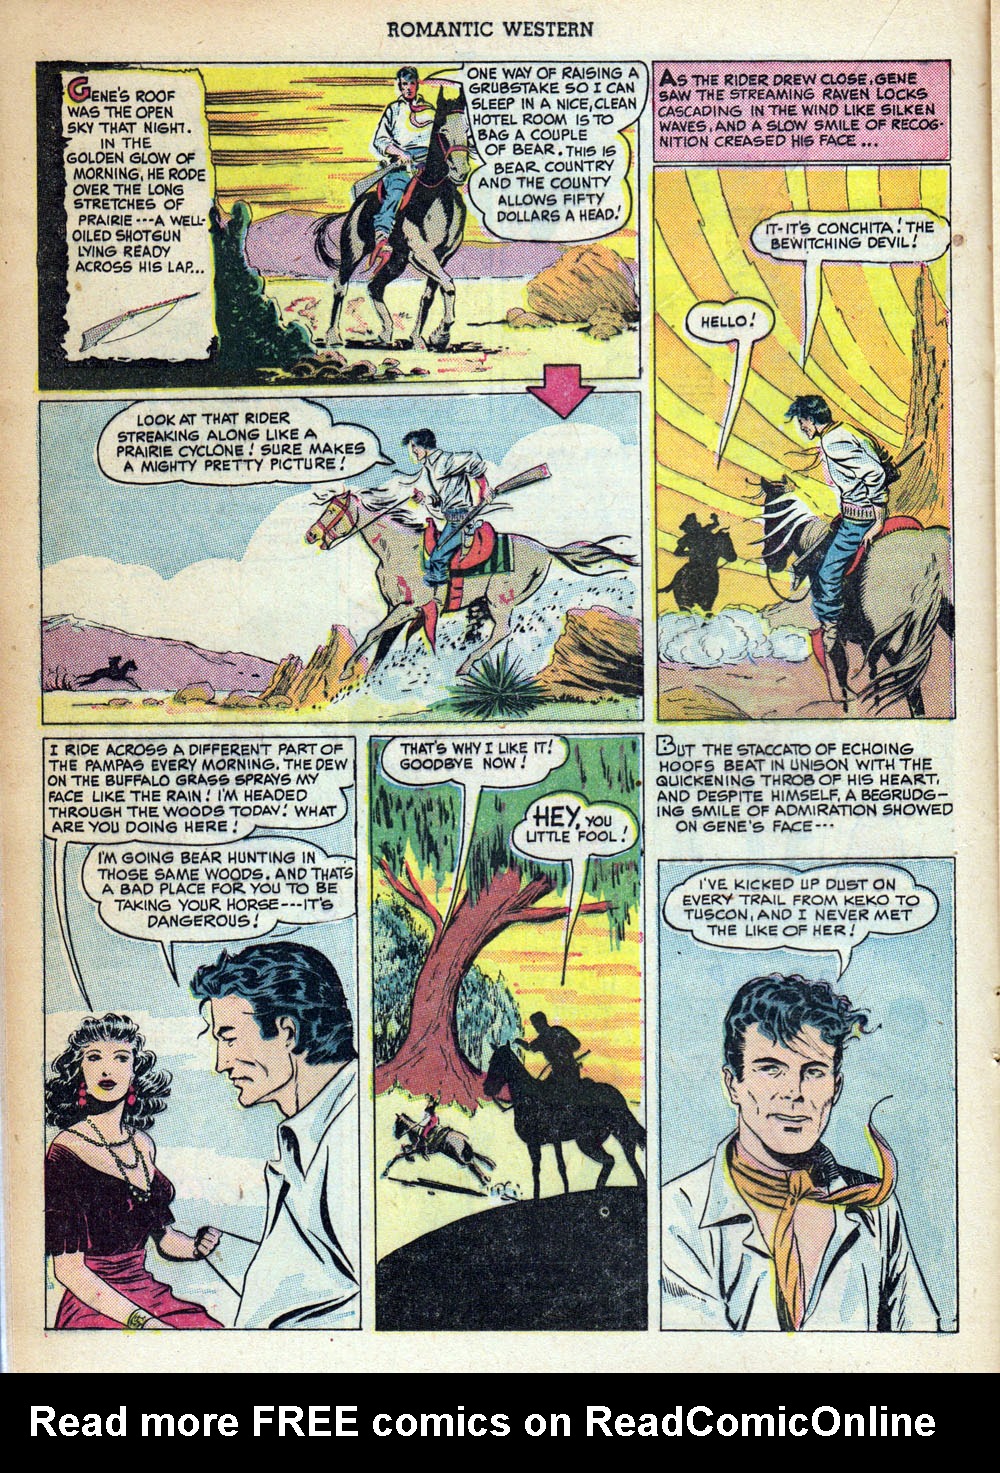 Read online Romantic Western comic -  Issue #2 - 16